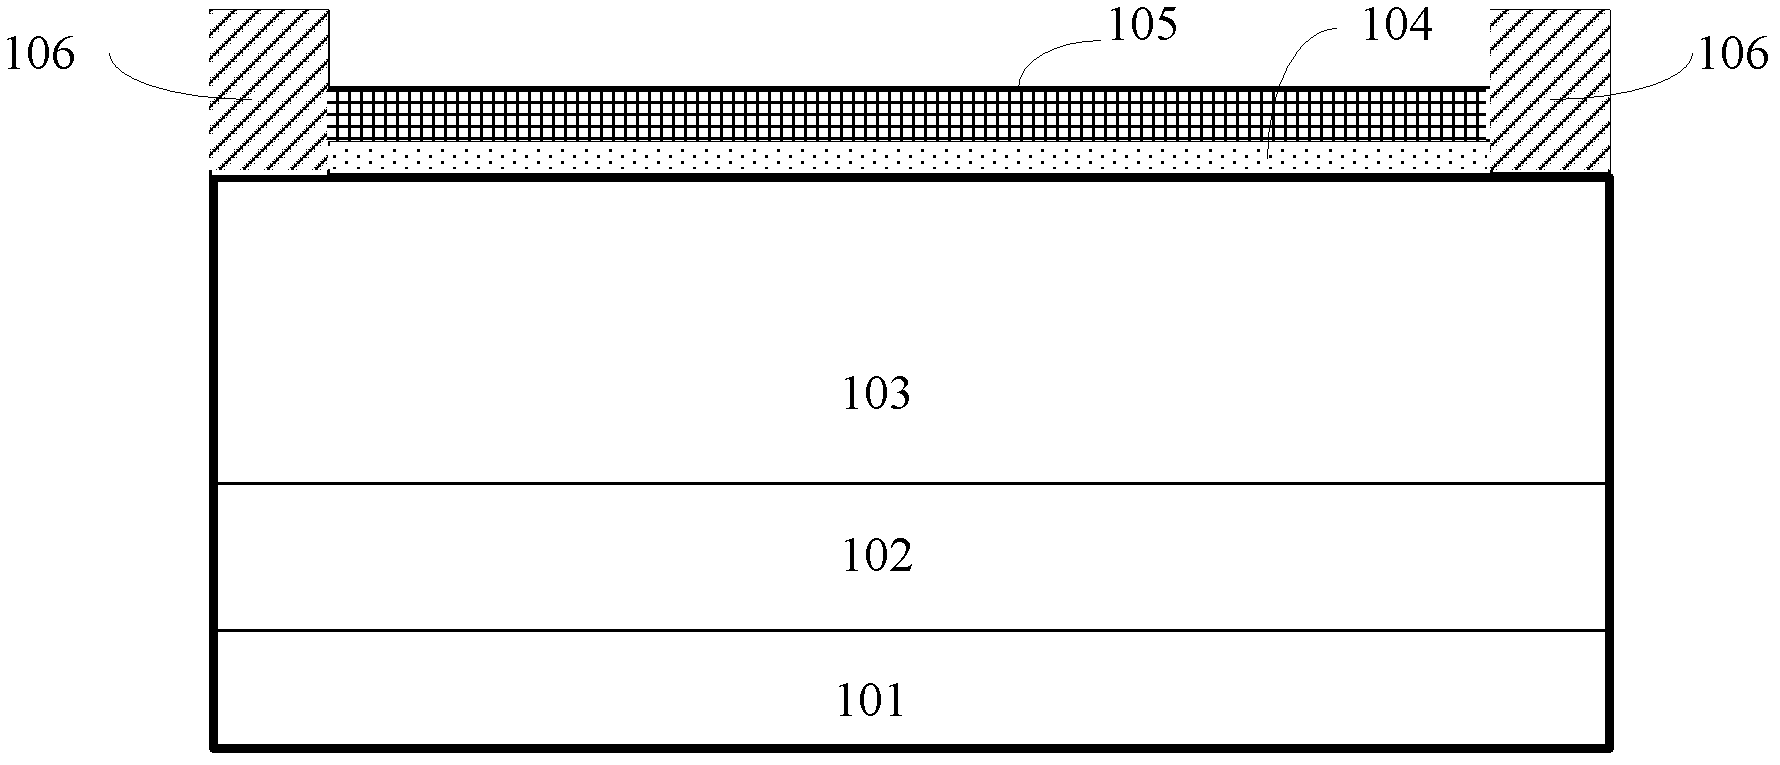 Insulated gate bipolar translator (IGBT) chip and method for producing same